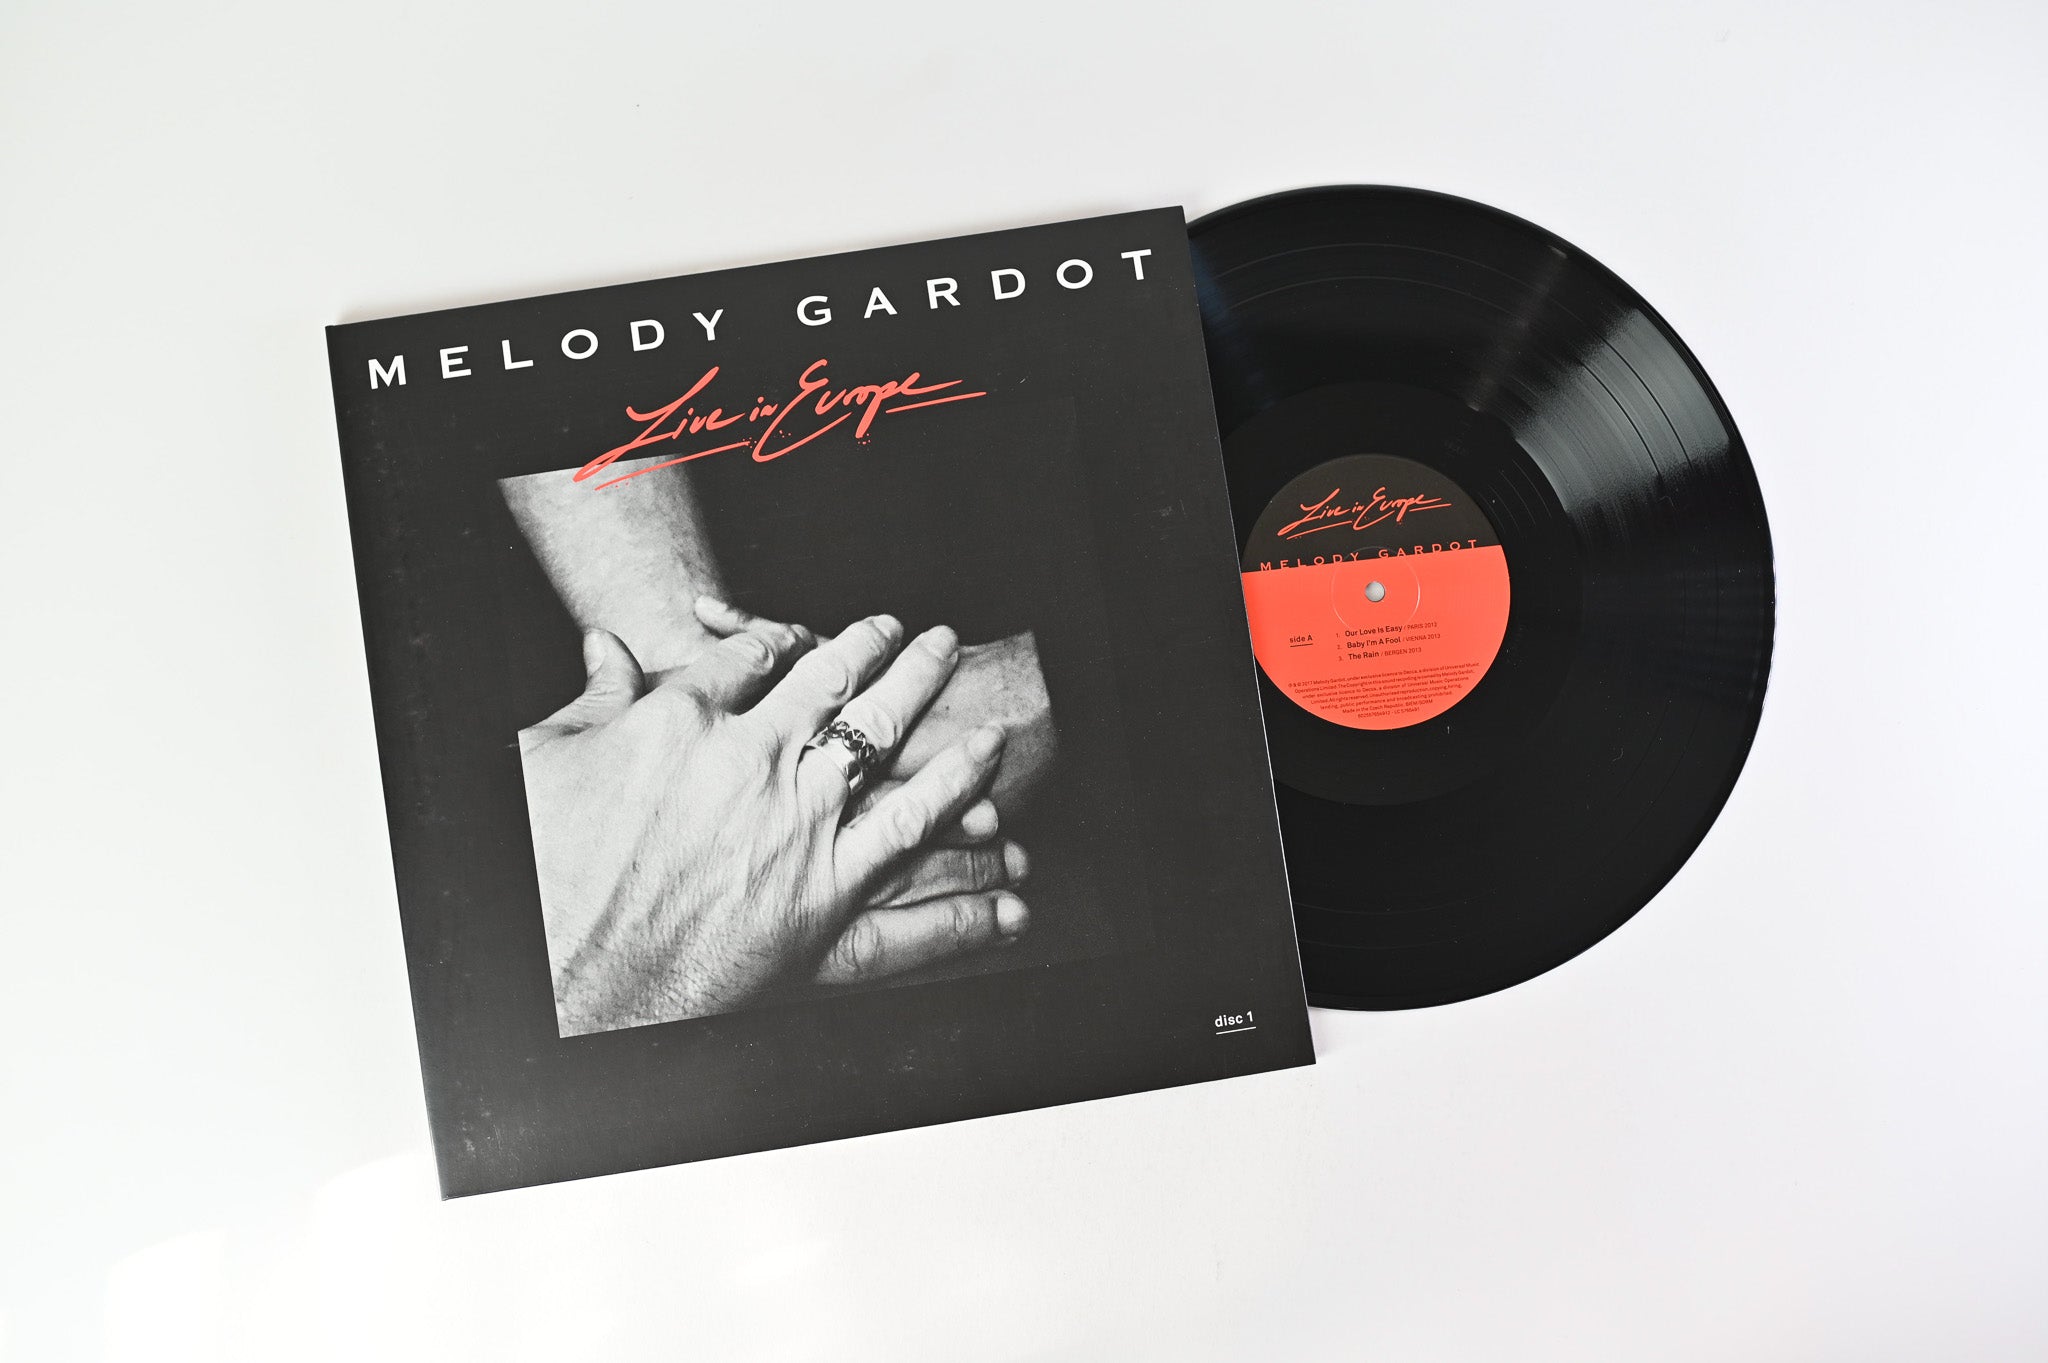 Melody Gardot - Live In Europe on Decca Ltd Box Set